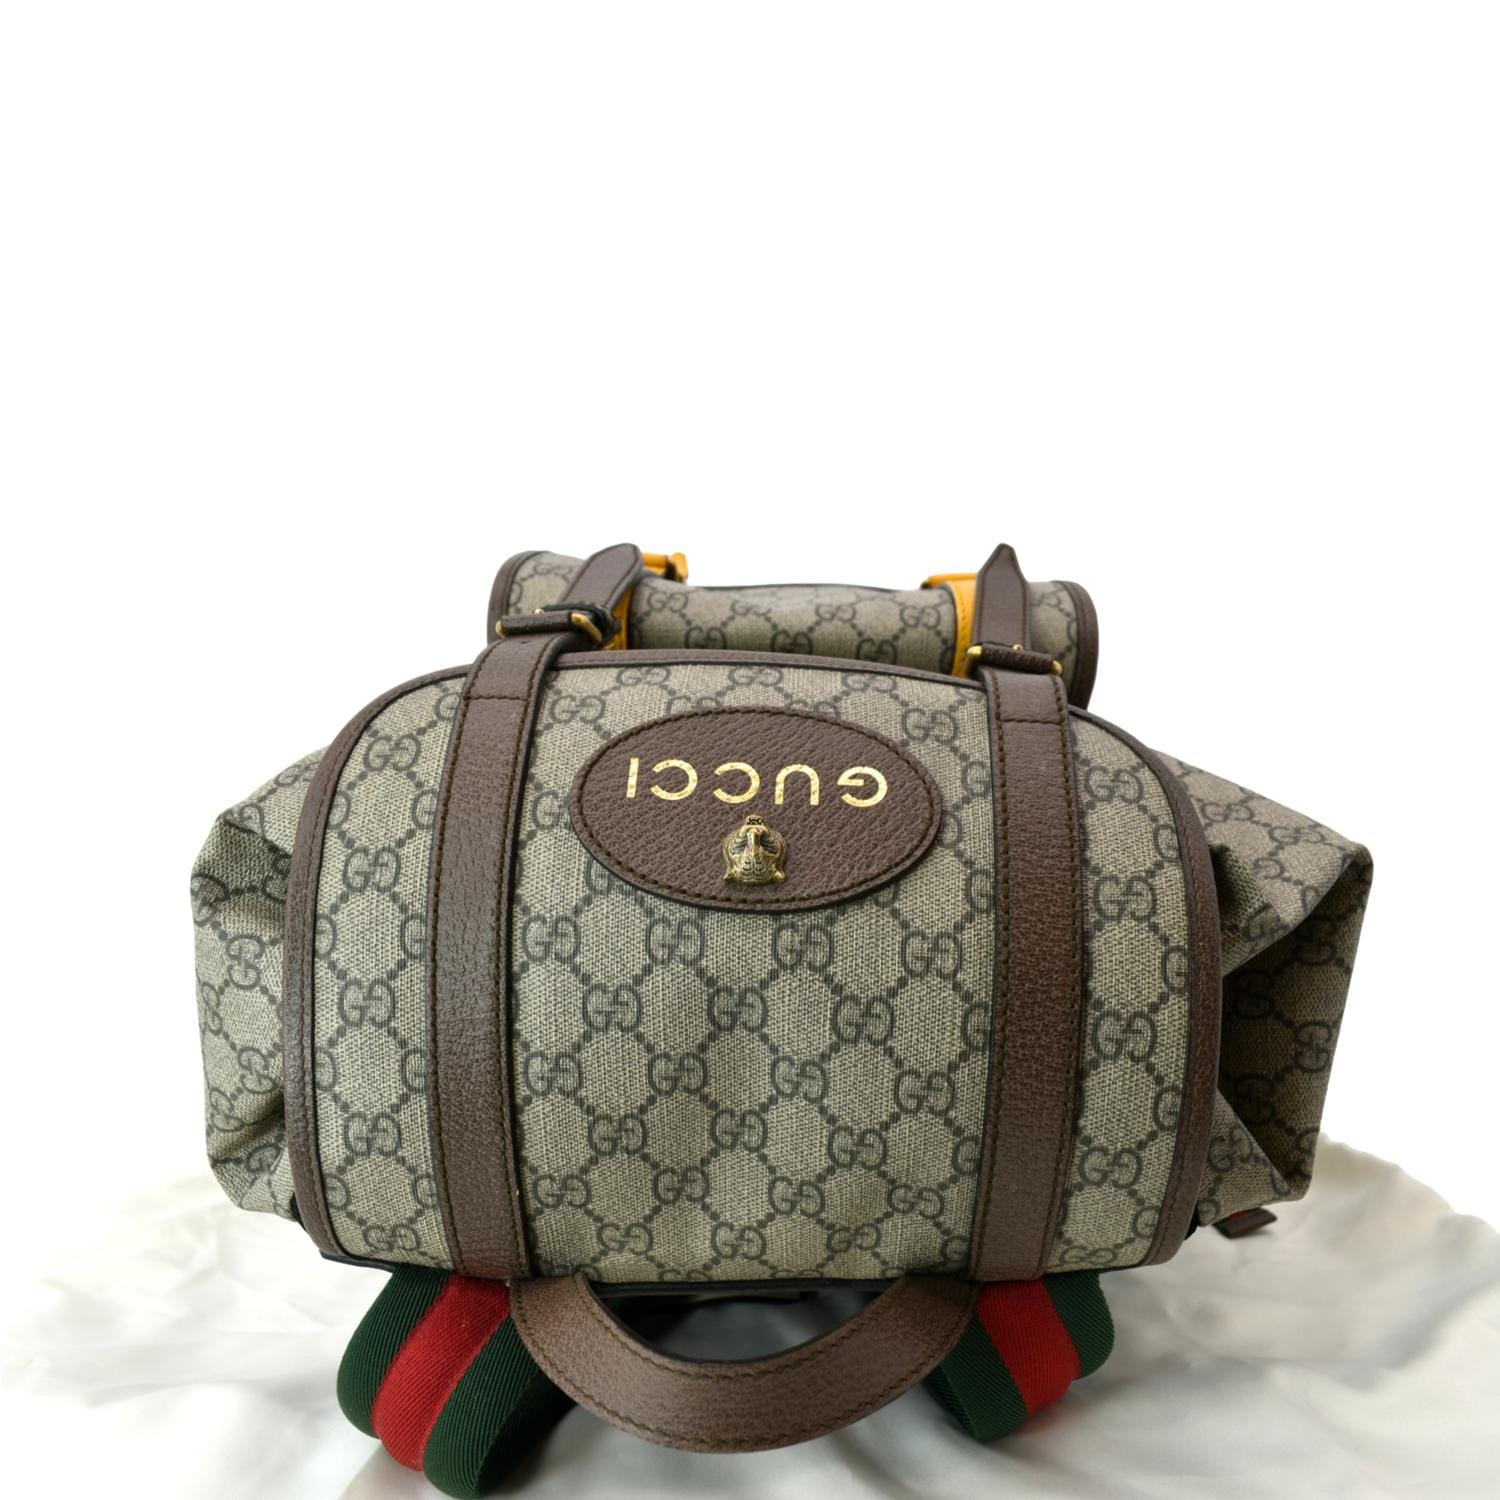 Gucci Beige/Brown GG Supreme Canvas Interlocking G Backpack Gucci